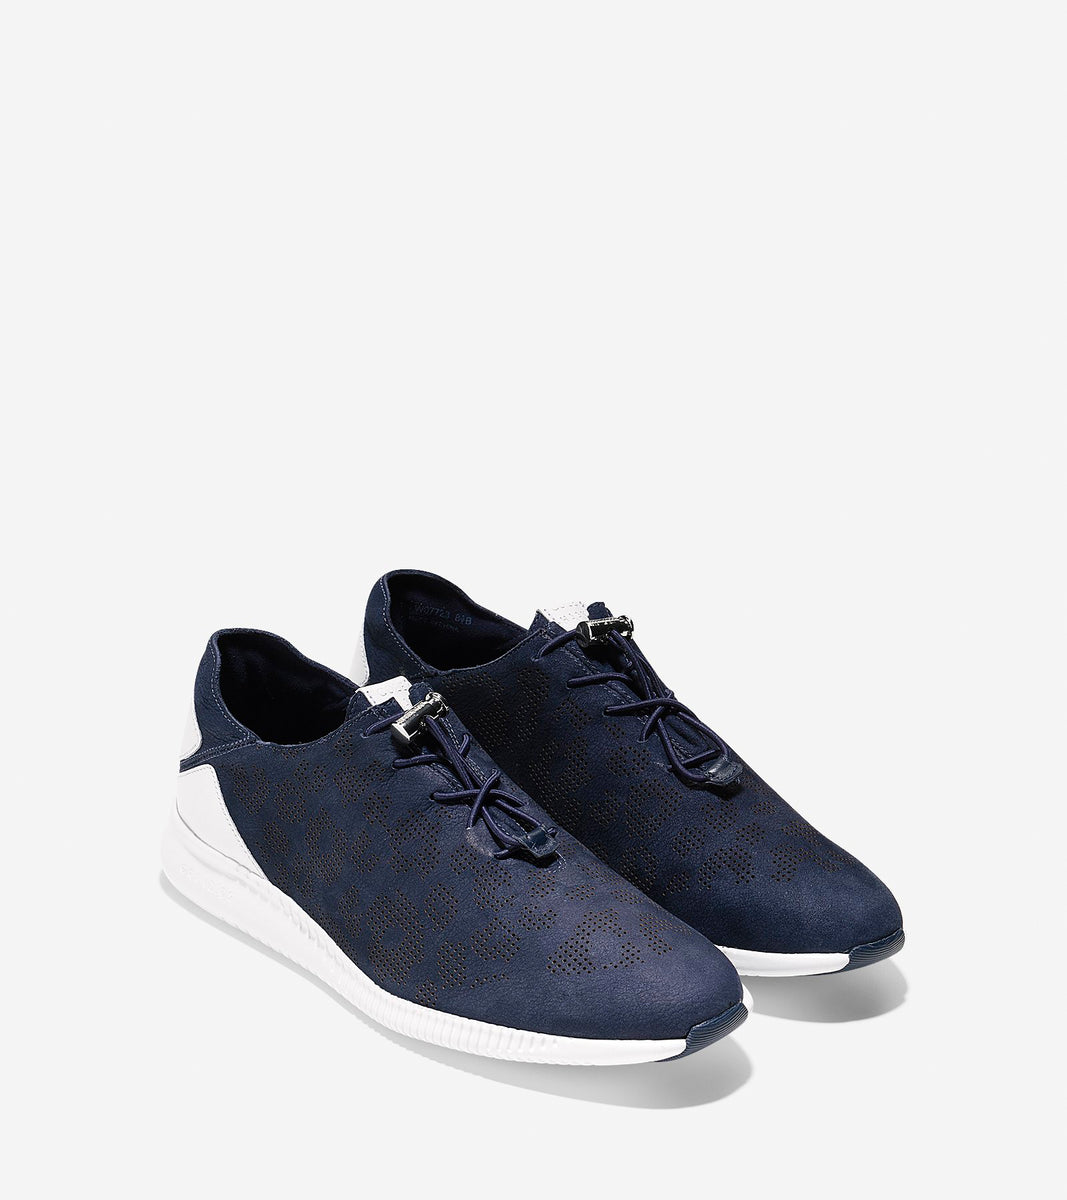 ColeHaan-StudiøGrand Pack-and-Go Sneaker-w07723-Marine Blue Perforated Ocelot Print Nubuck